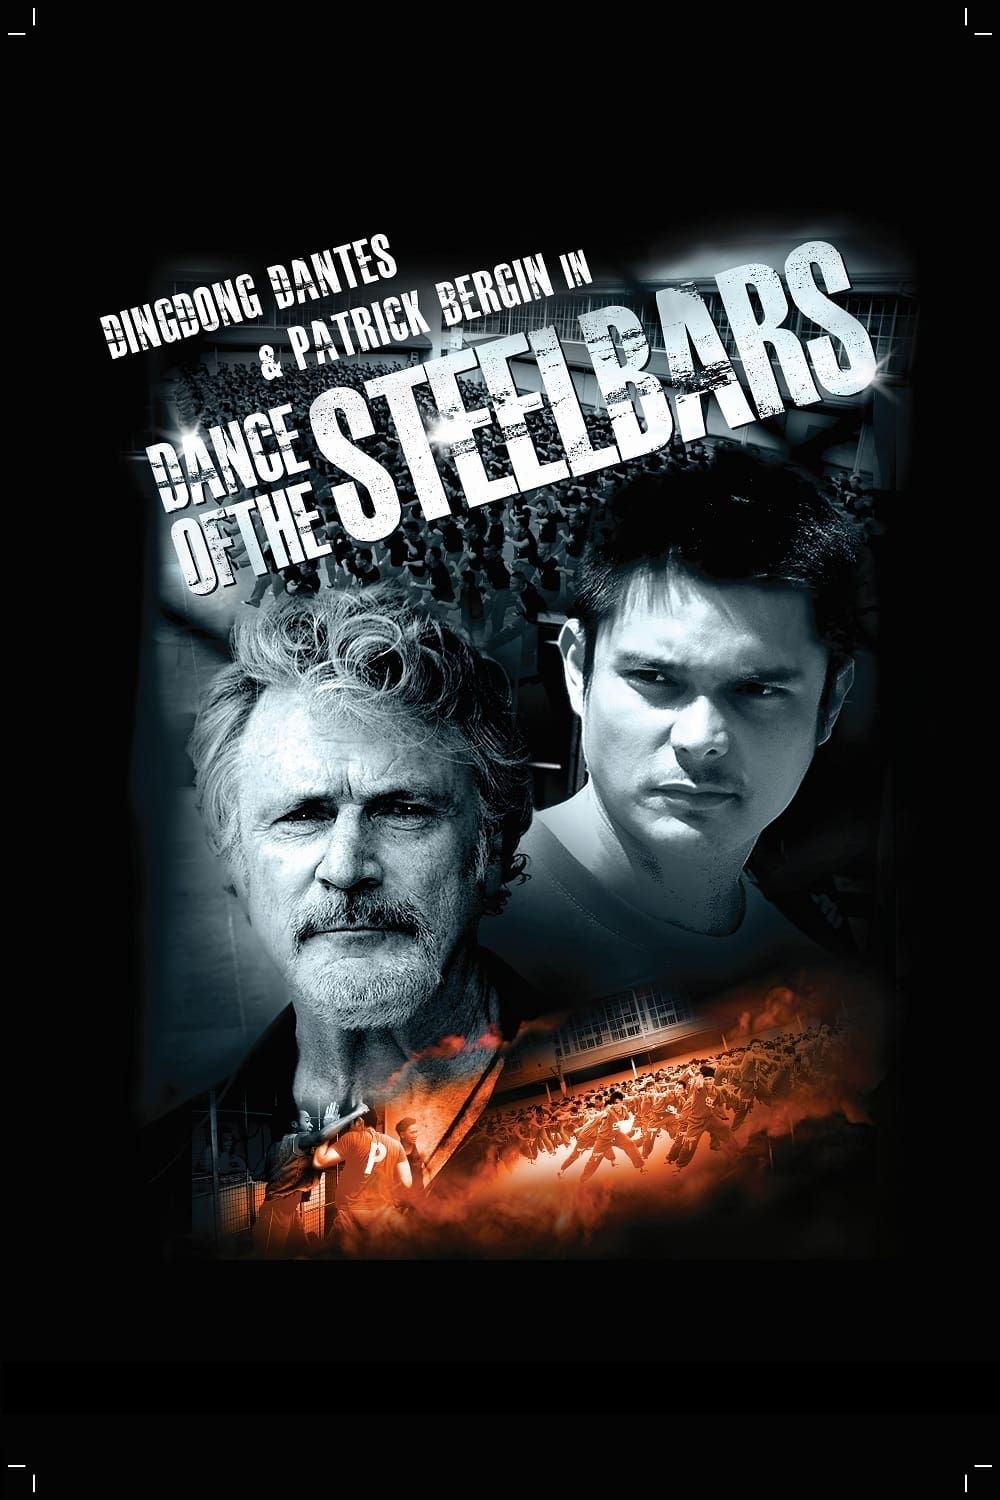 Dance of the Steel Bars (2013)